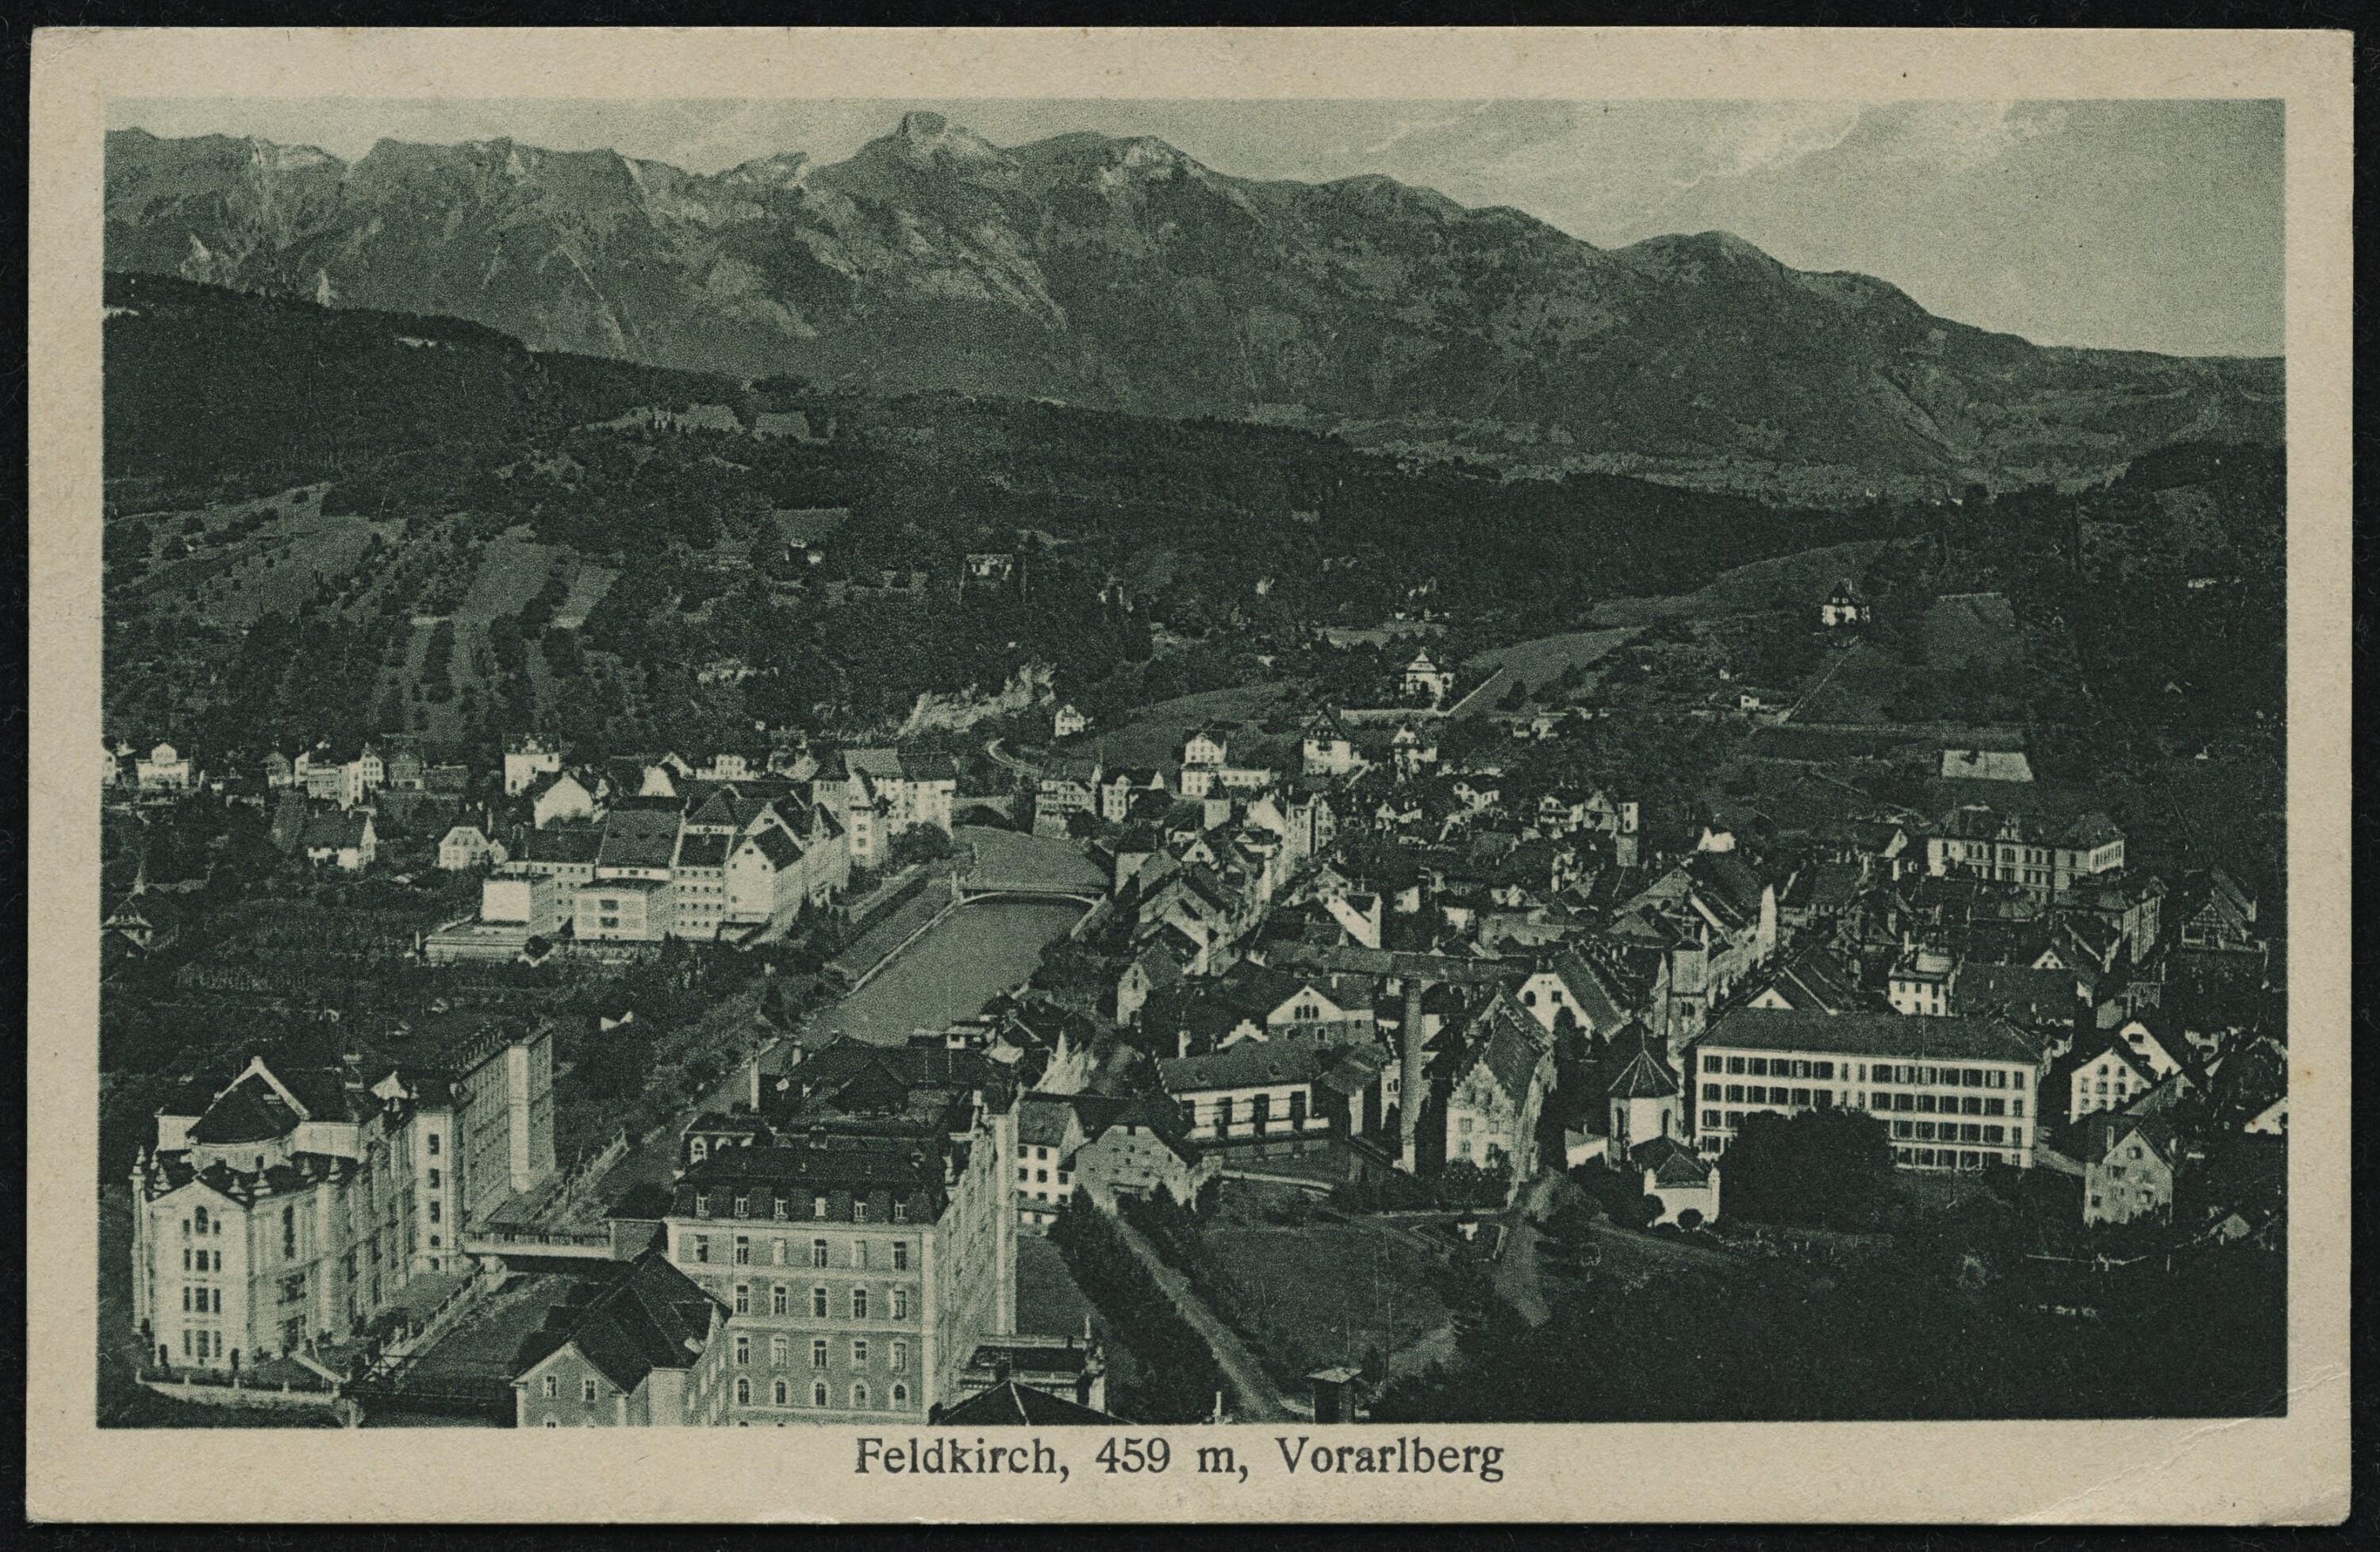 Feldkirch, 459 m, Vorarlberg></div>


    <hr>
    <div class=